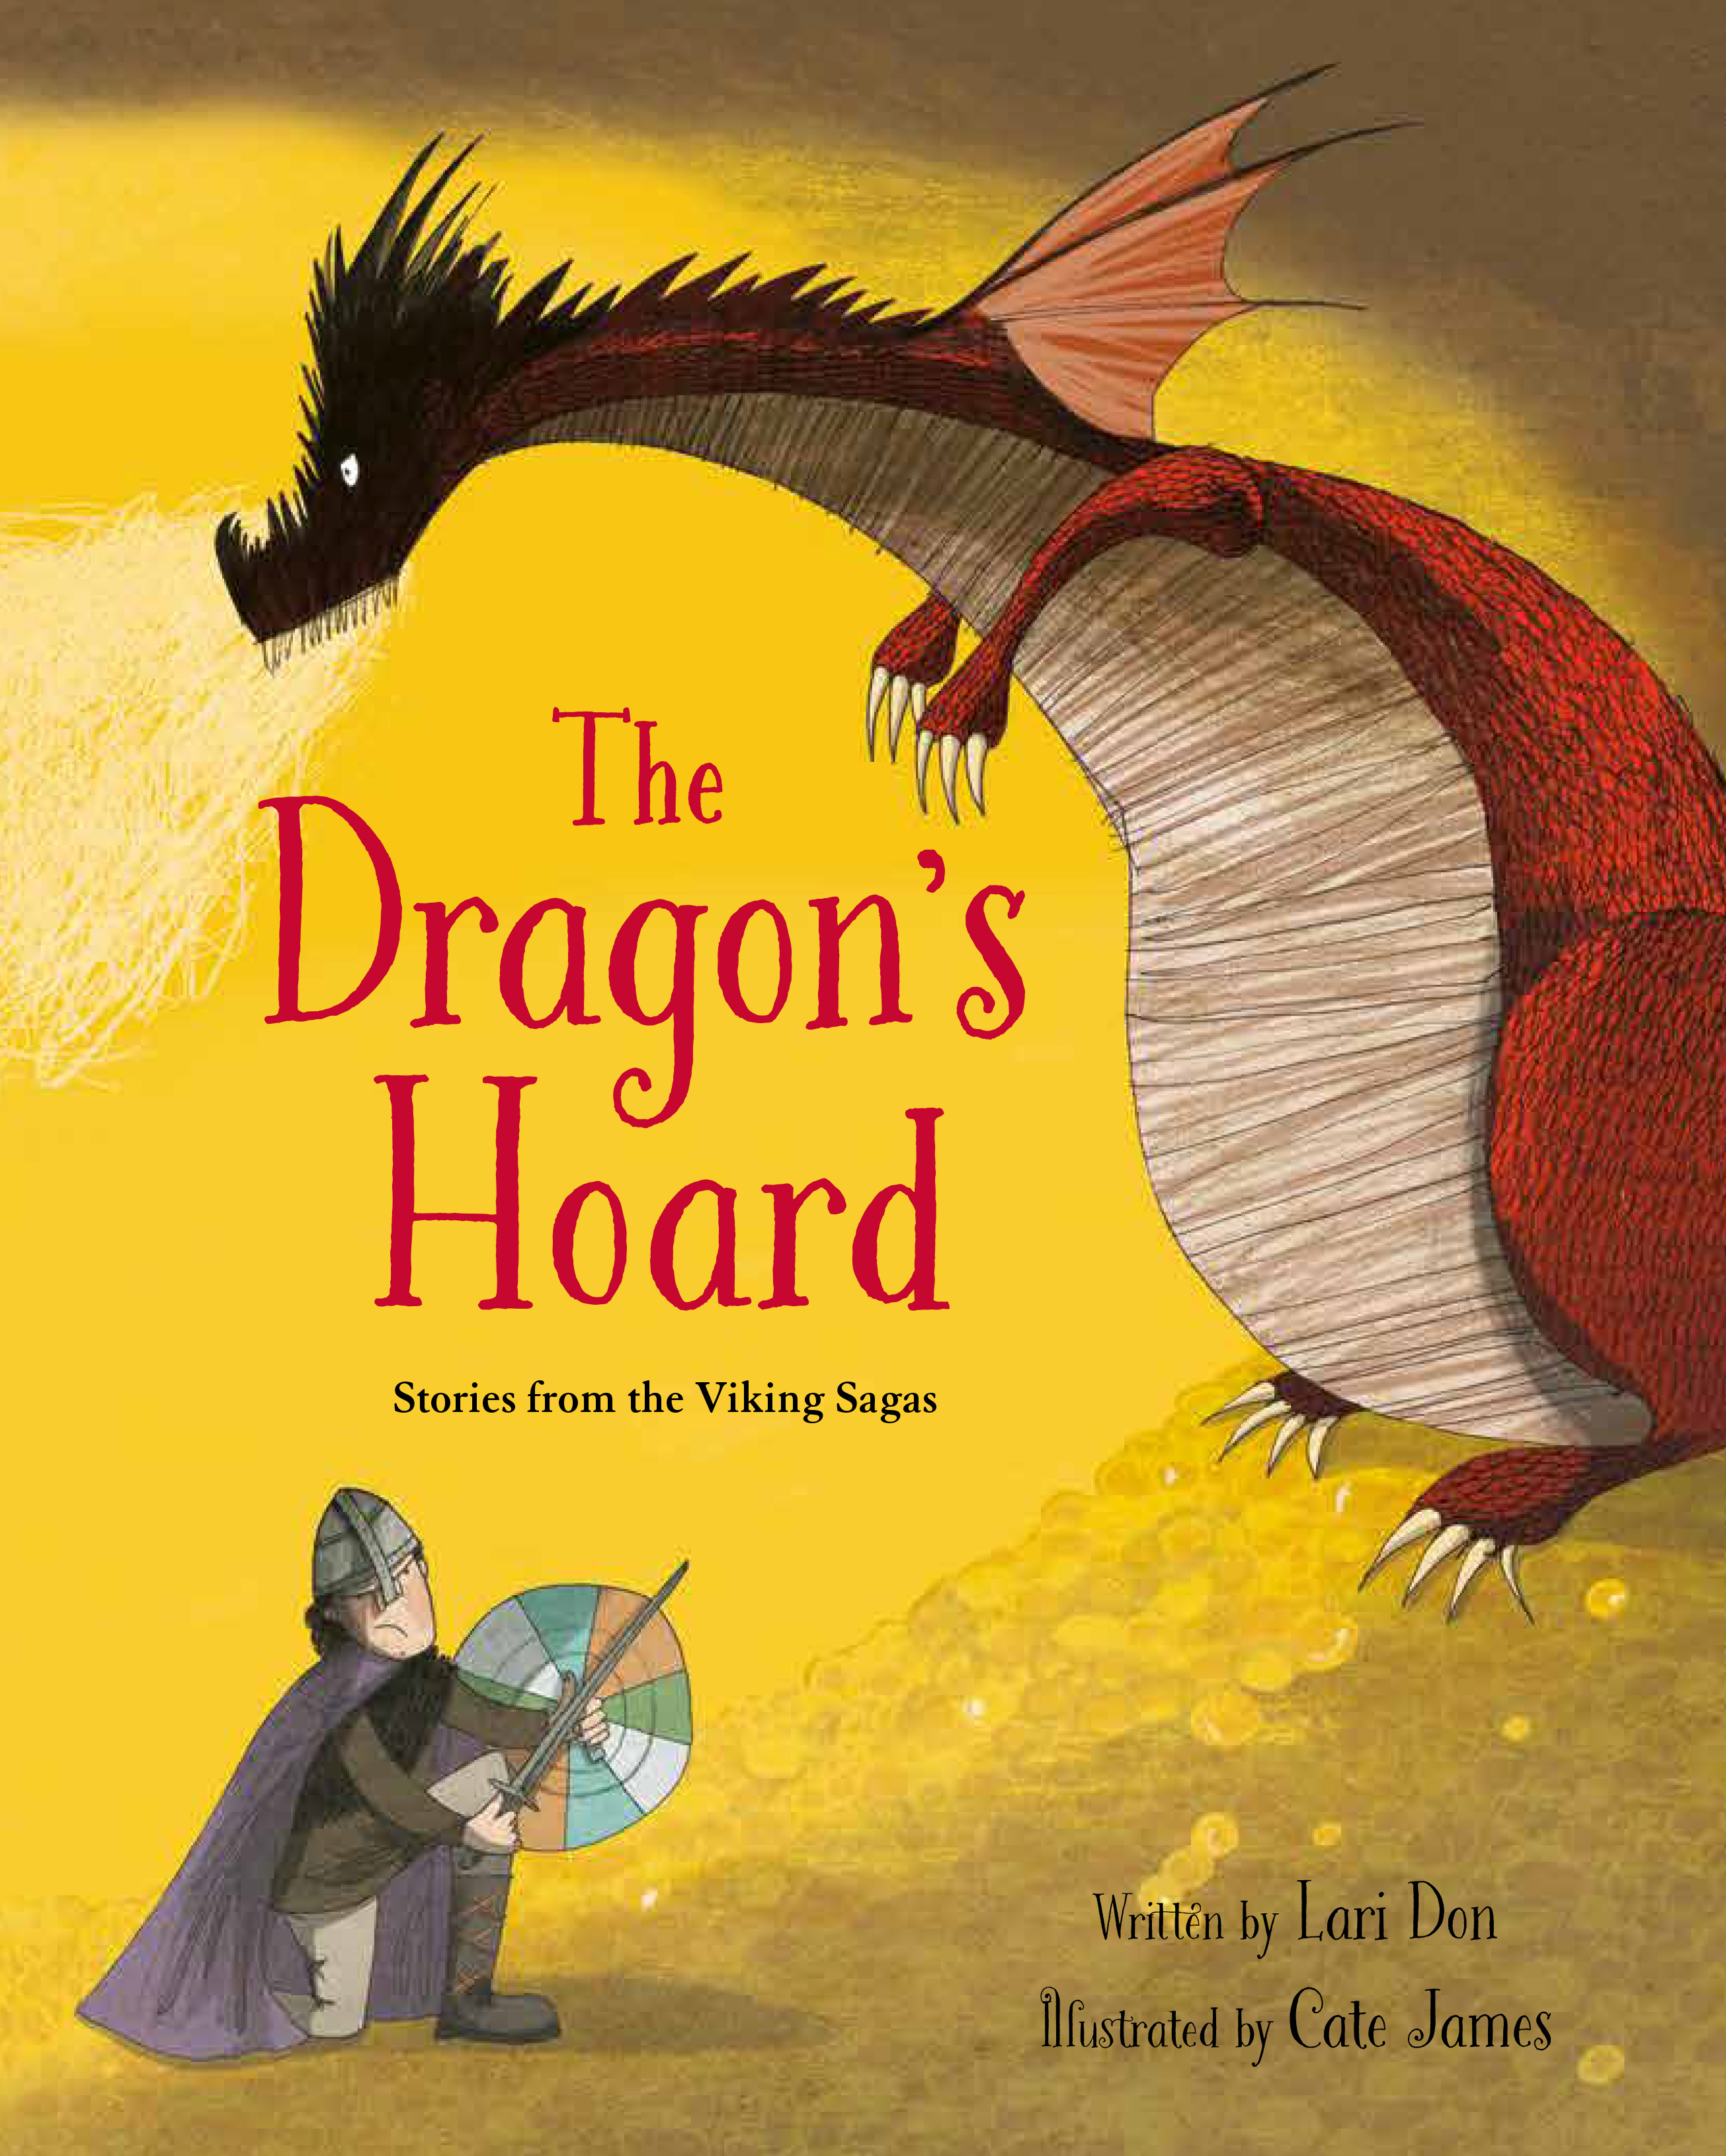 The Dragon’s Hoard – retellings of Viking Saga tales © Cate James (Frances Lincoln, Quarto Books)